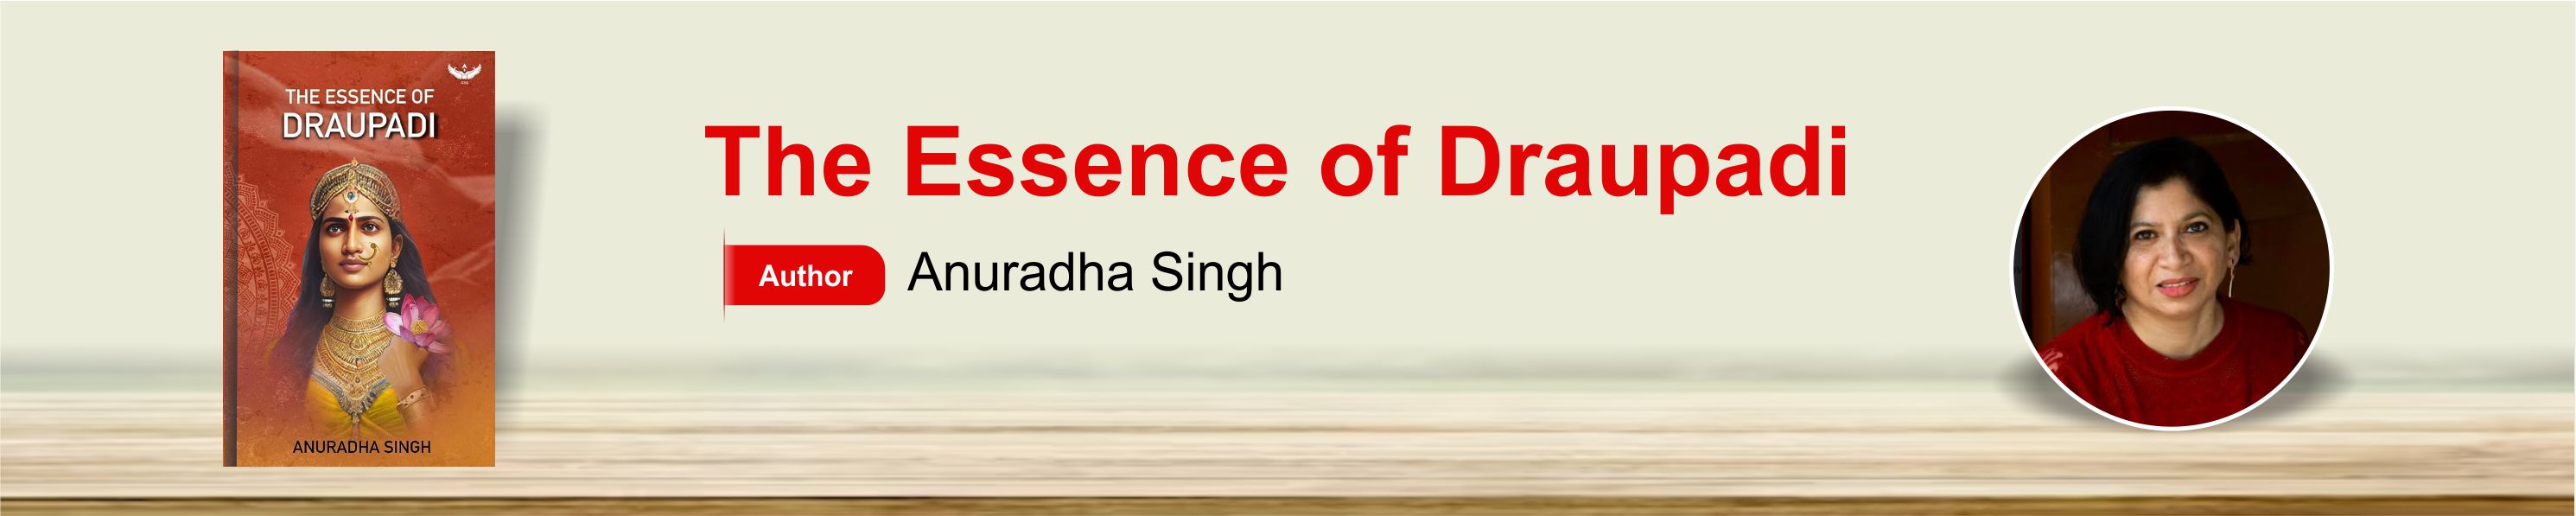 The Essence of Draupadi